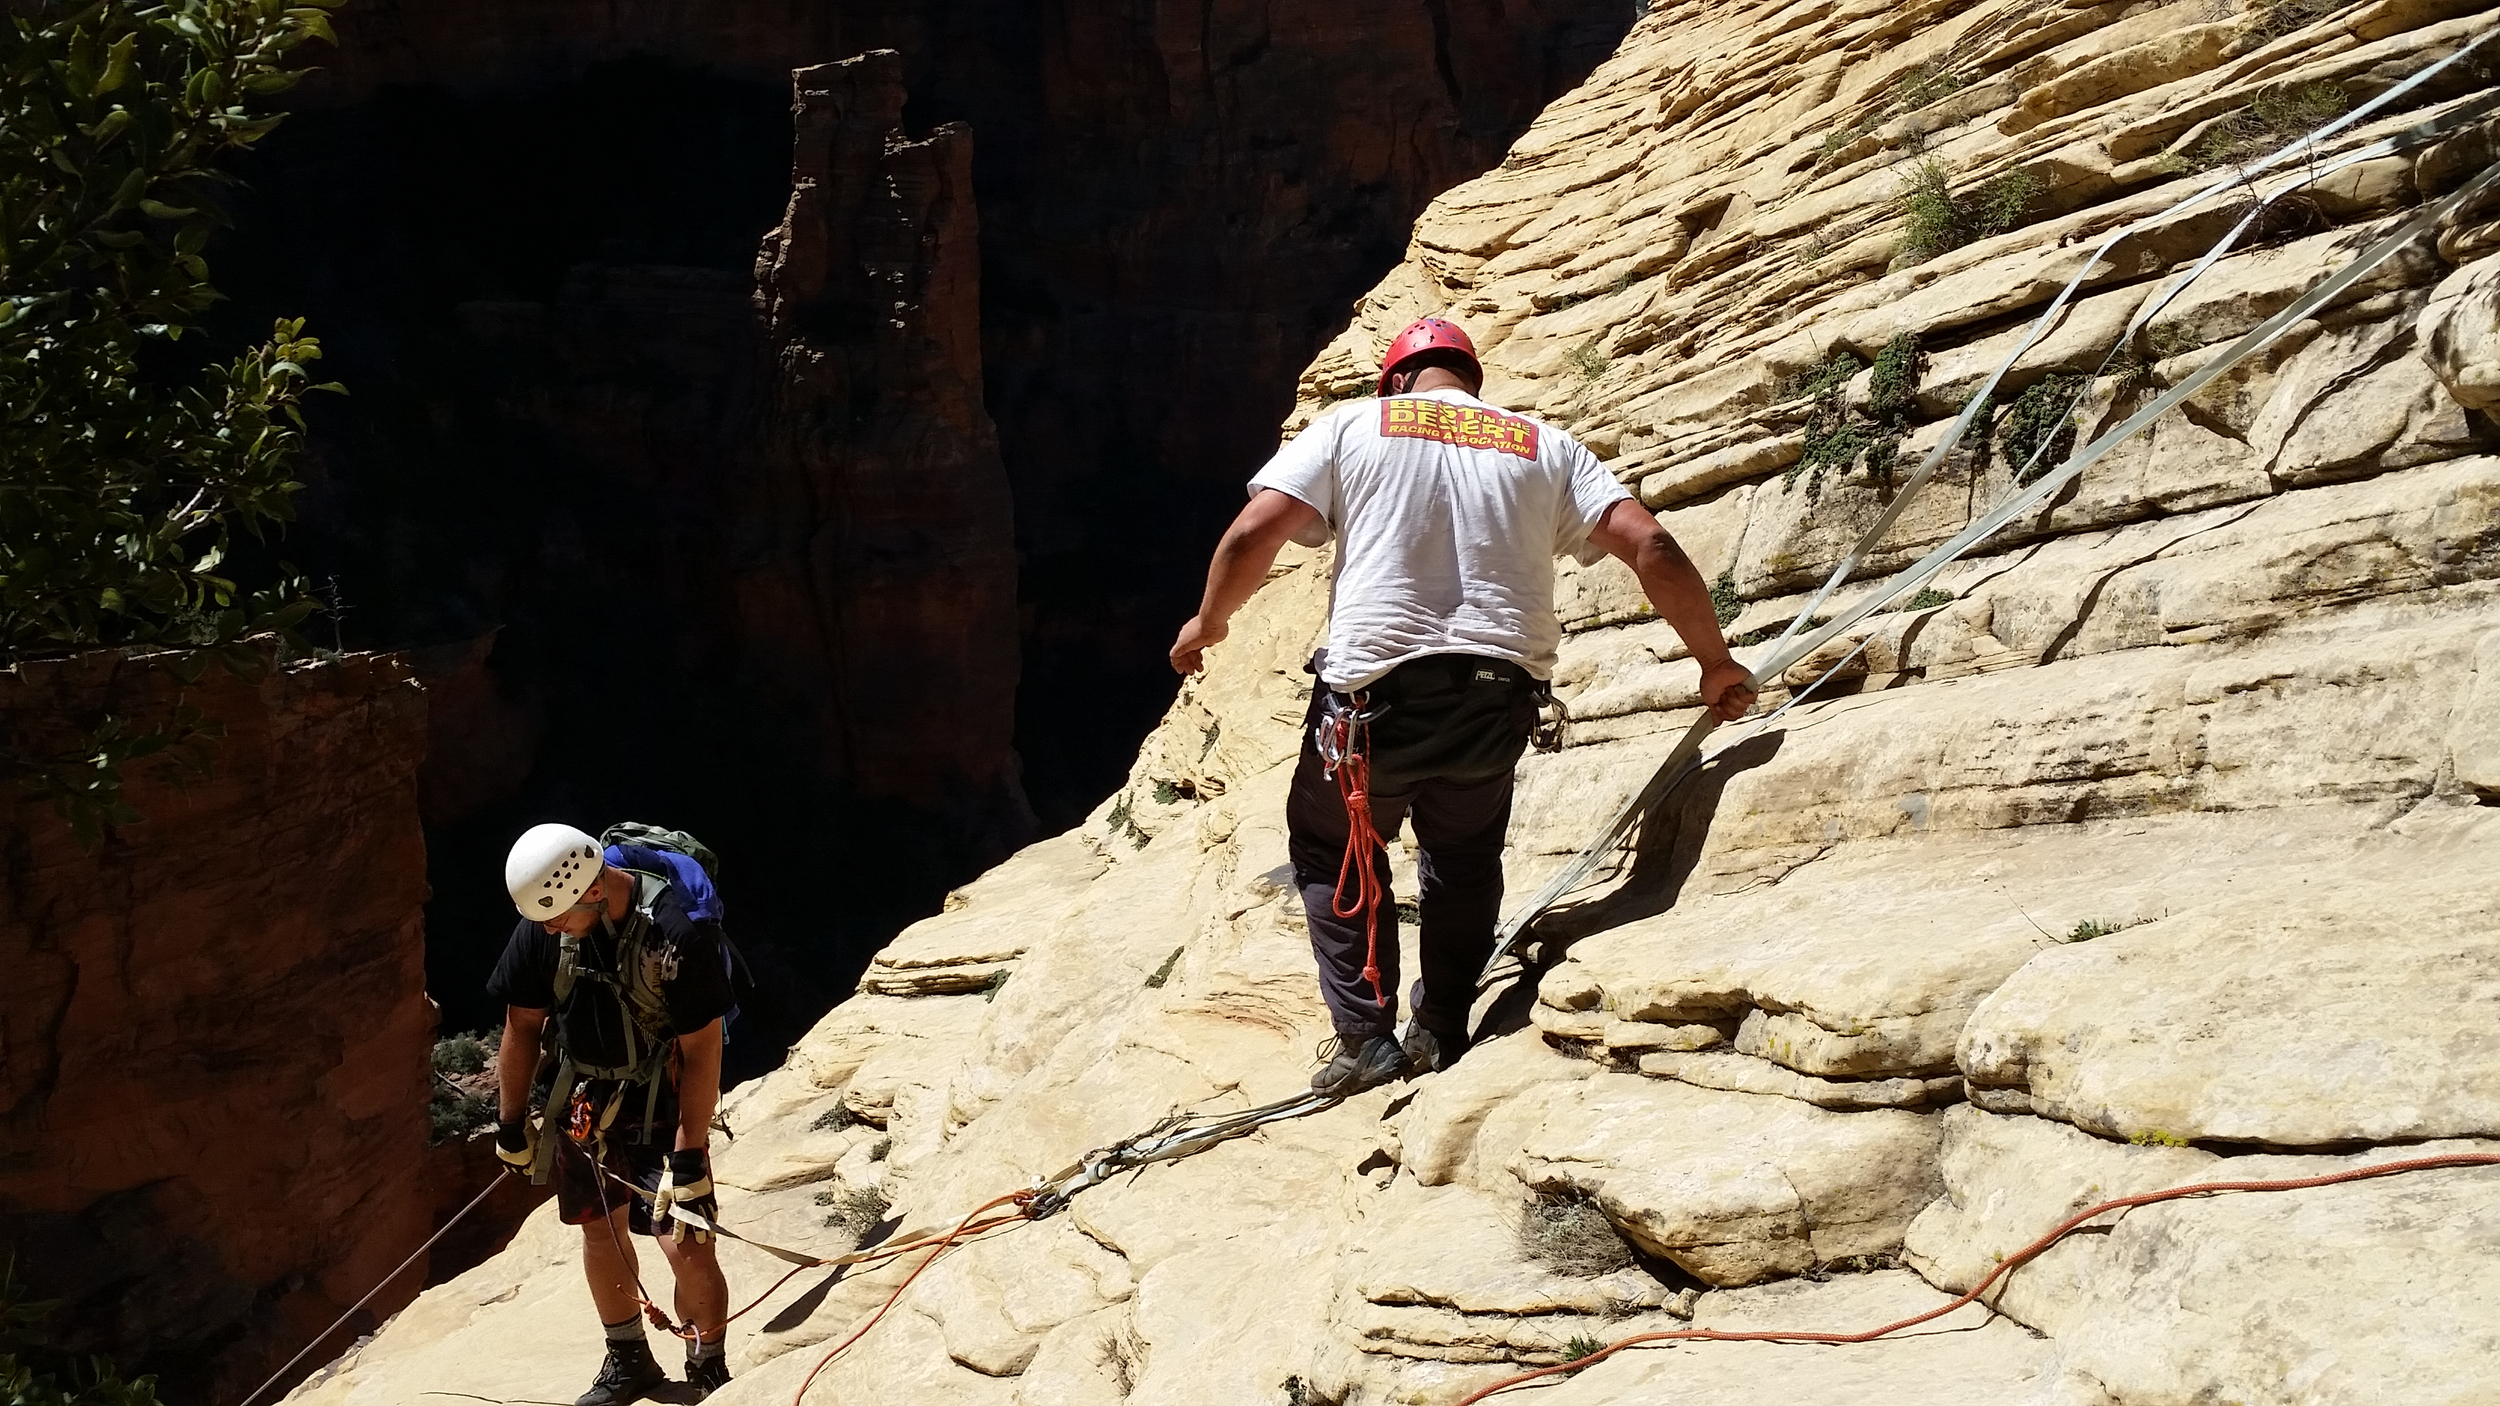 Mormon Canyon, AZ - On Rope Canyoneering